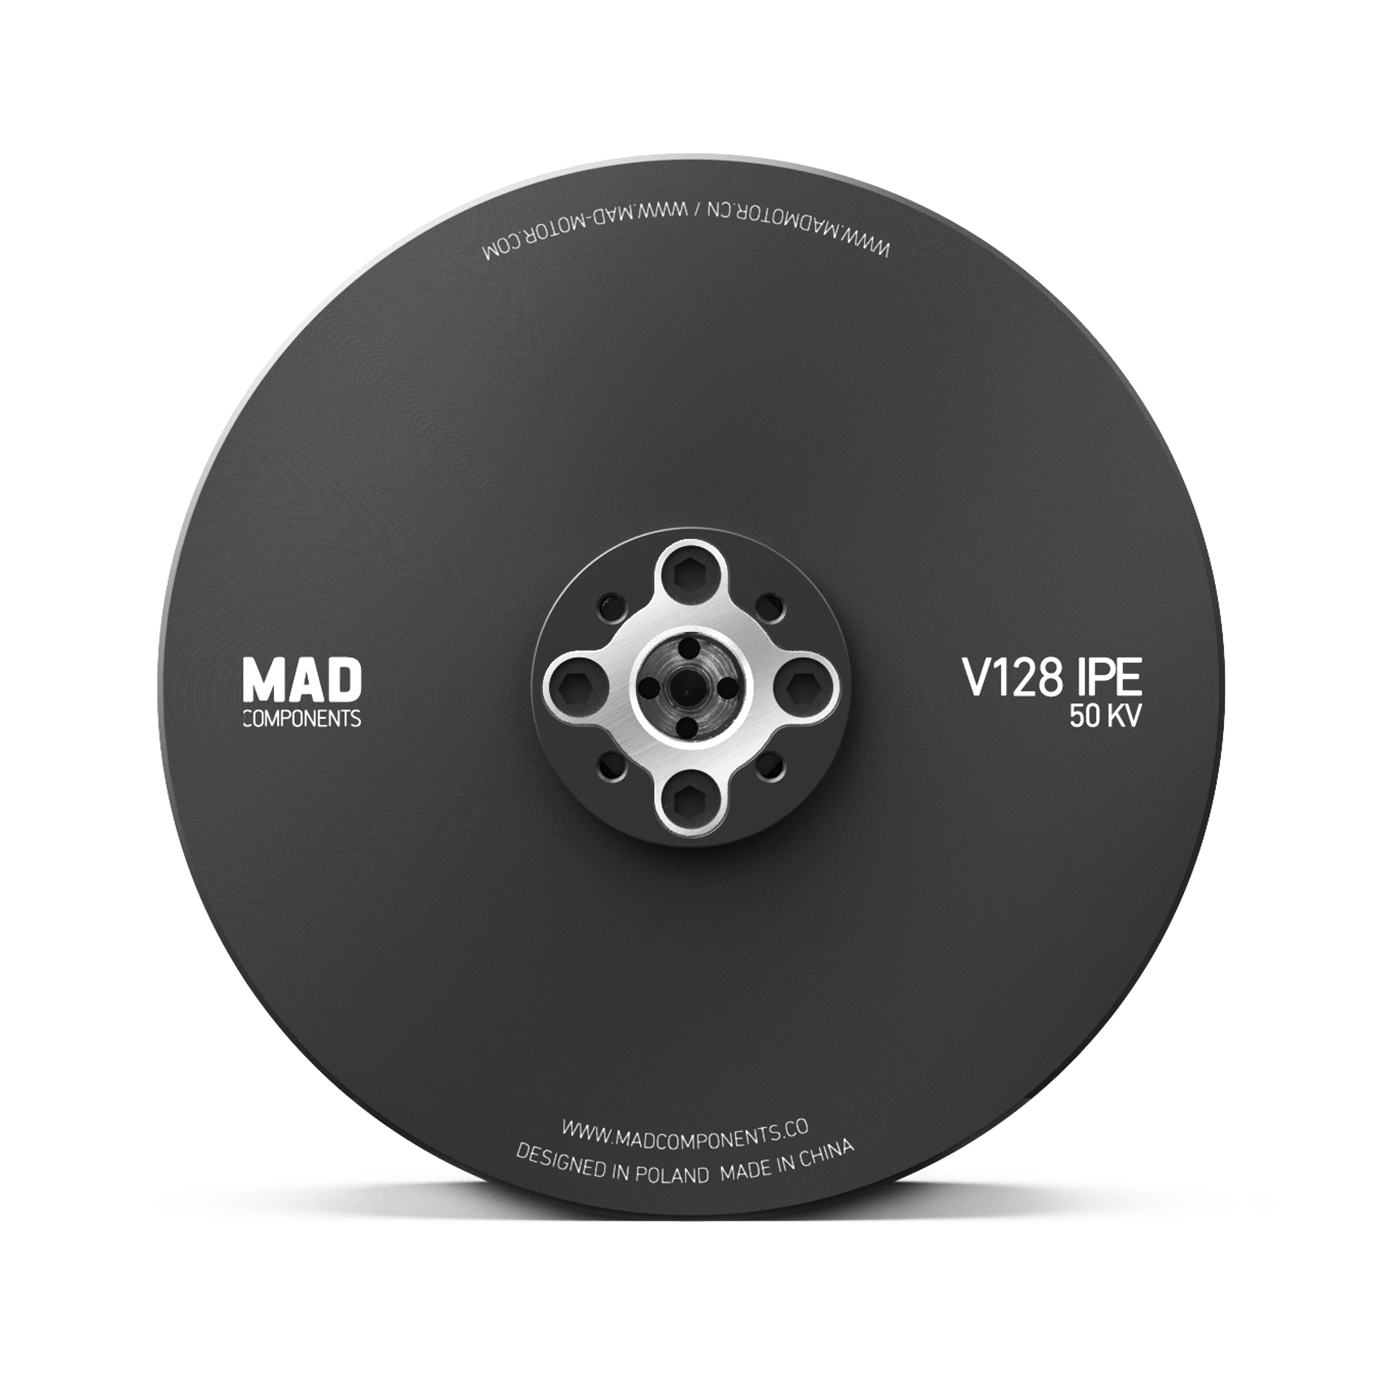 MAD V128 VTOL DRONE MOTOR for the flying drone